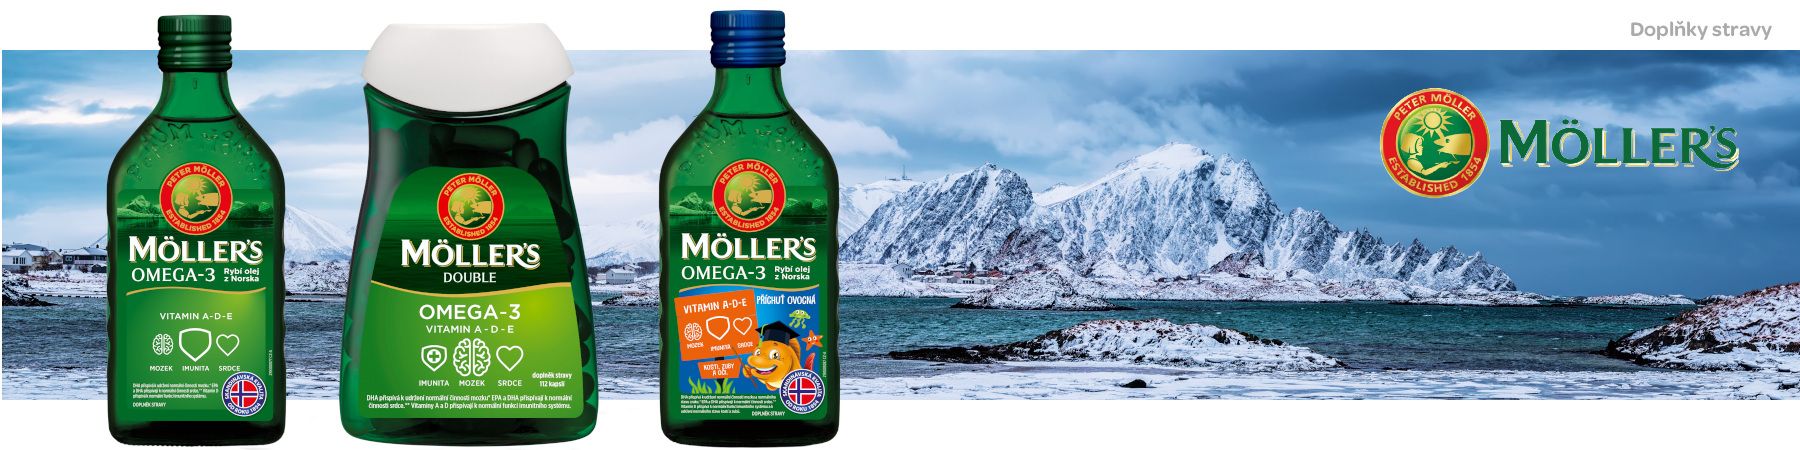  Mollers Omega 3